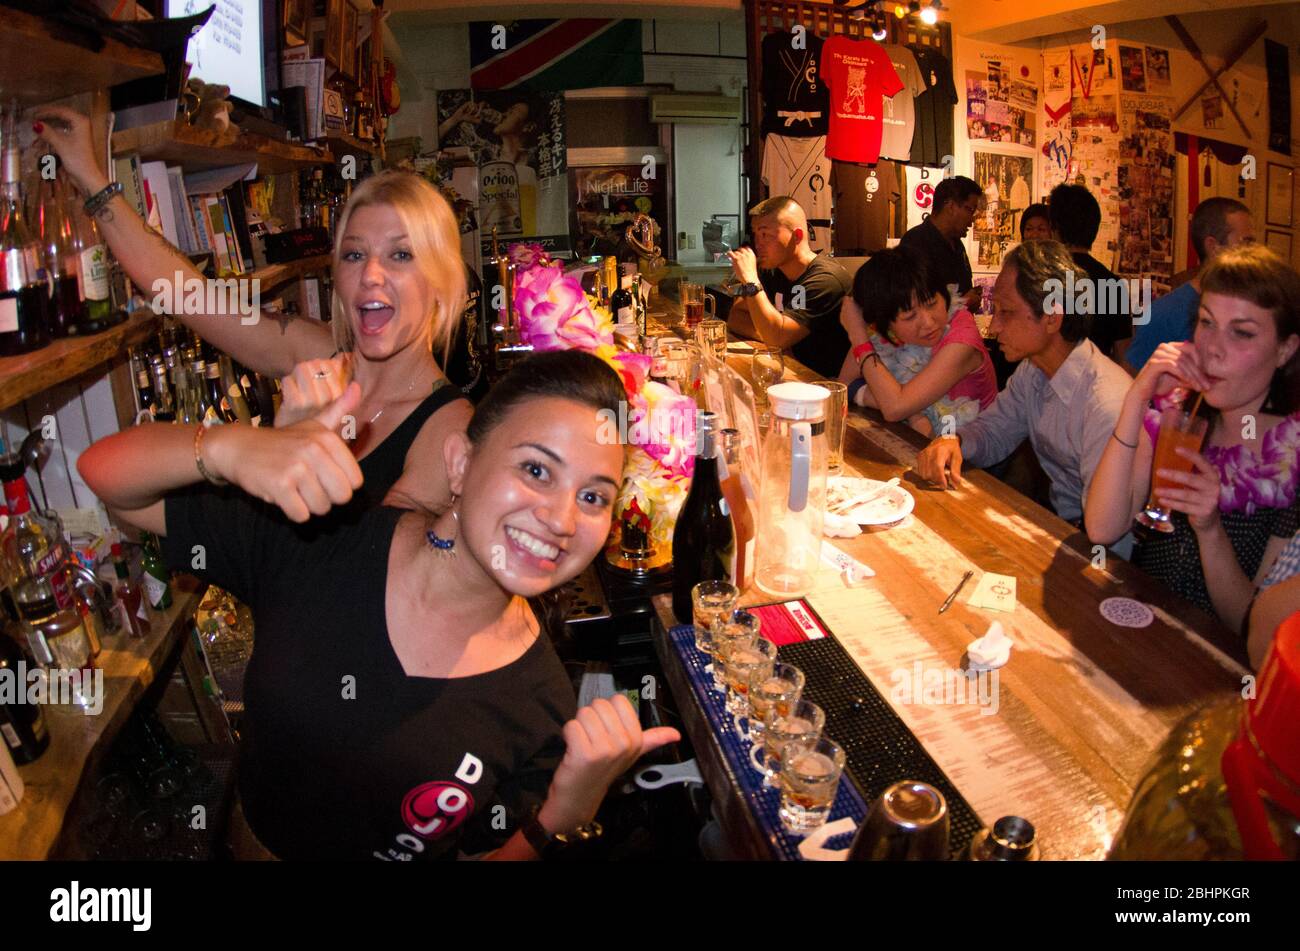 The Dojo Bar, a karate themed bar / cafe in Naha City, Okinawa the birthplace of karate. Stock Photo